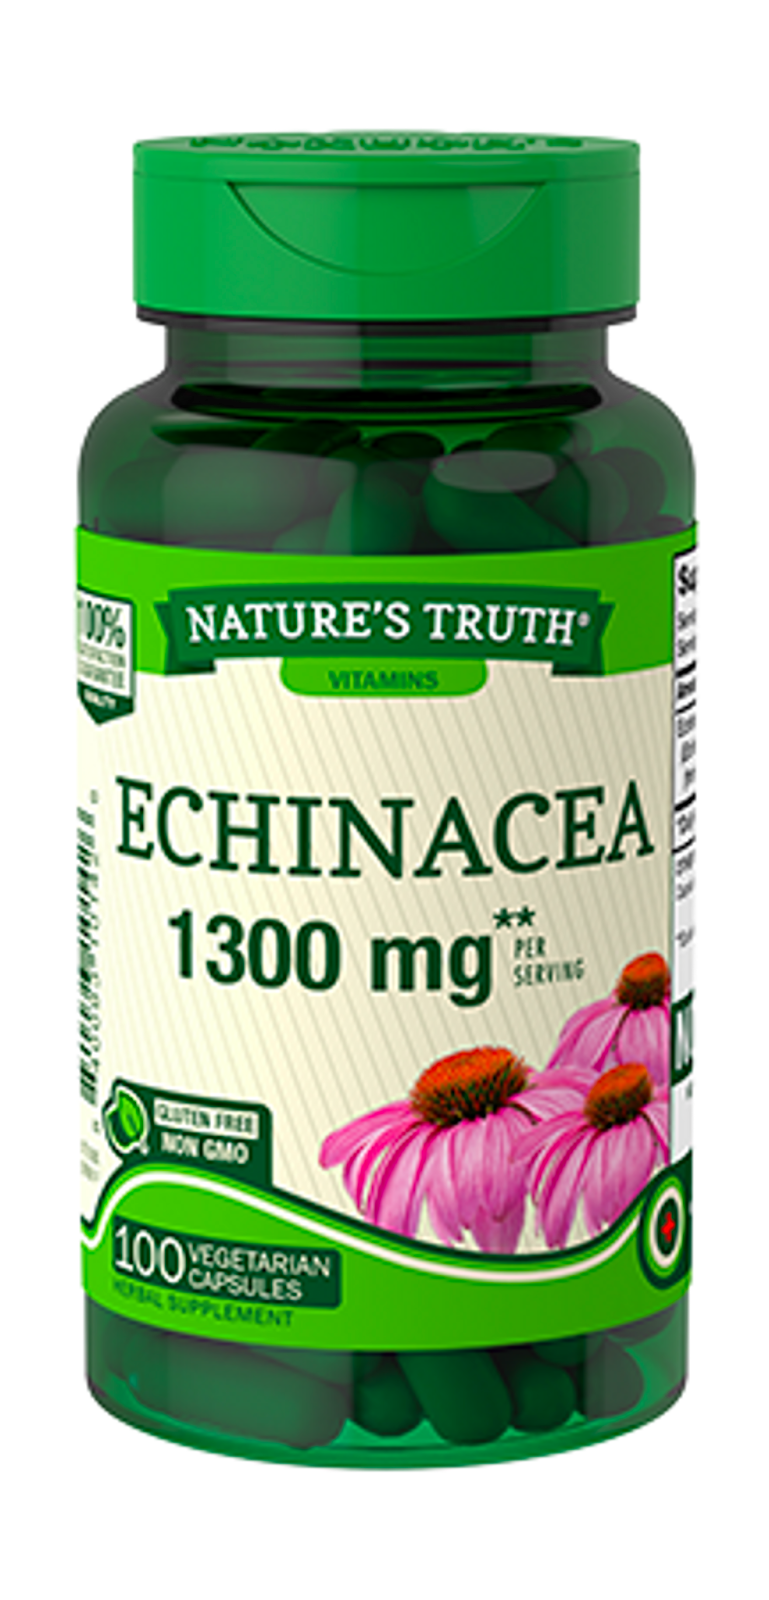 Taking echinacea for immune boosting